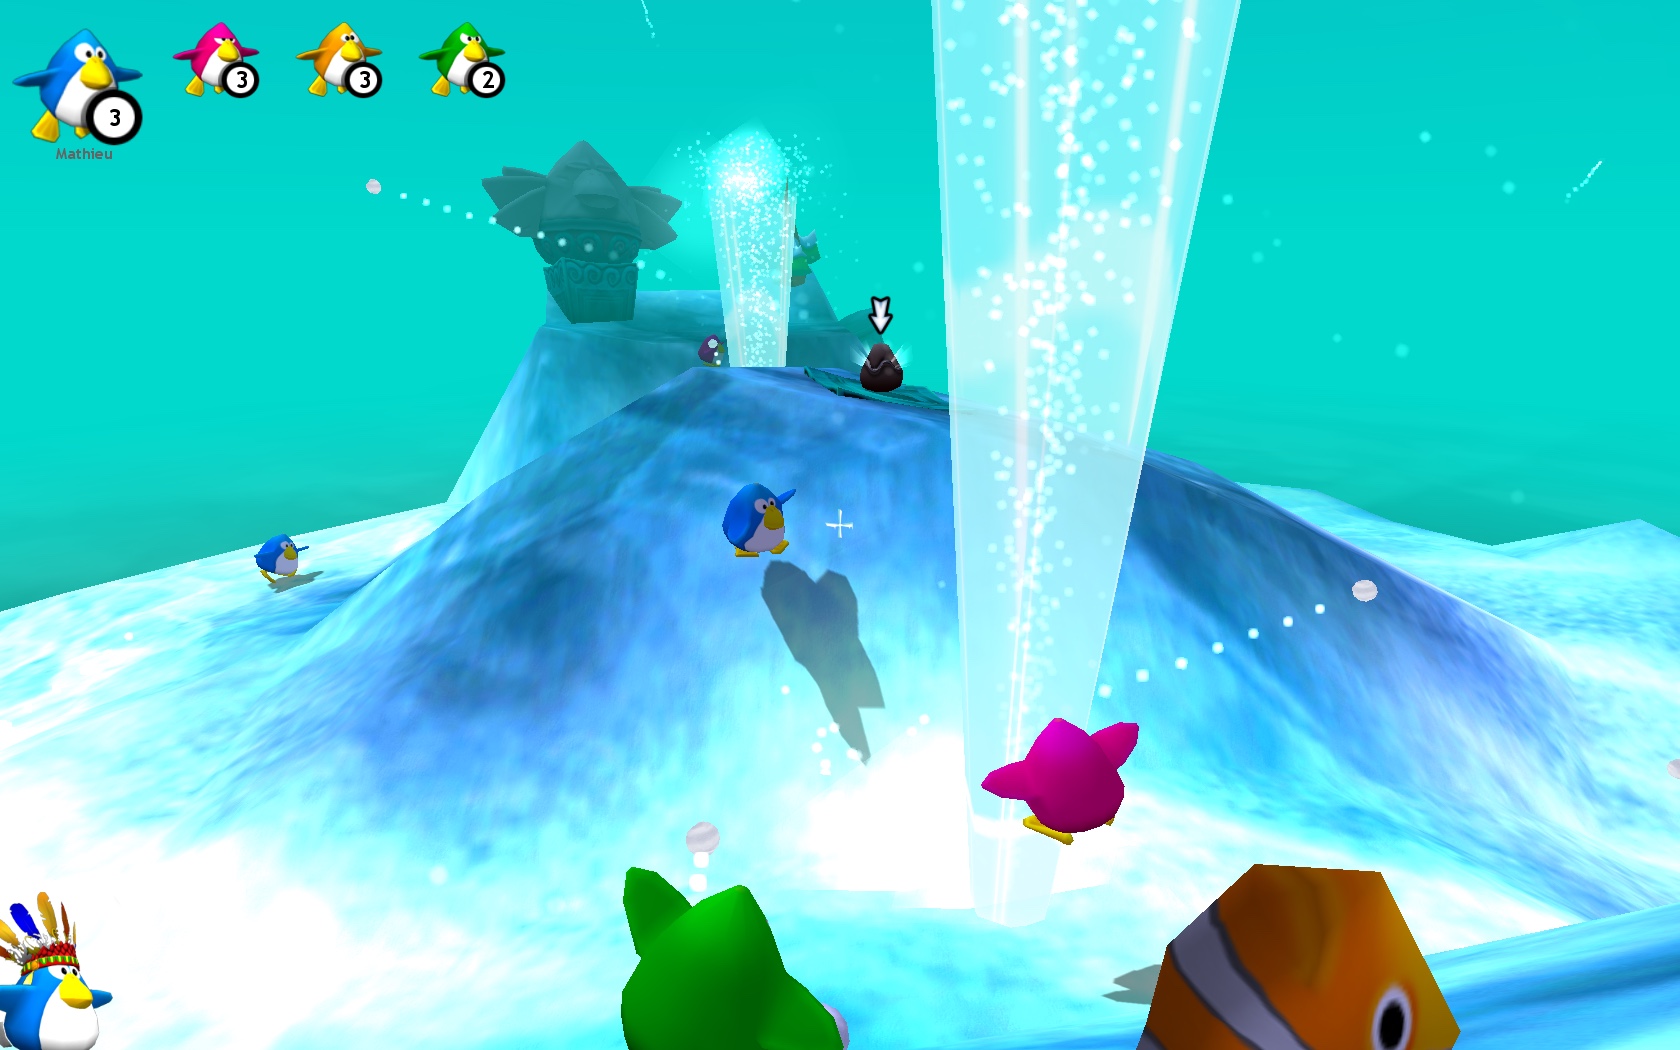 Penguins Arena: Sedna's World screenshot